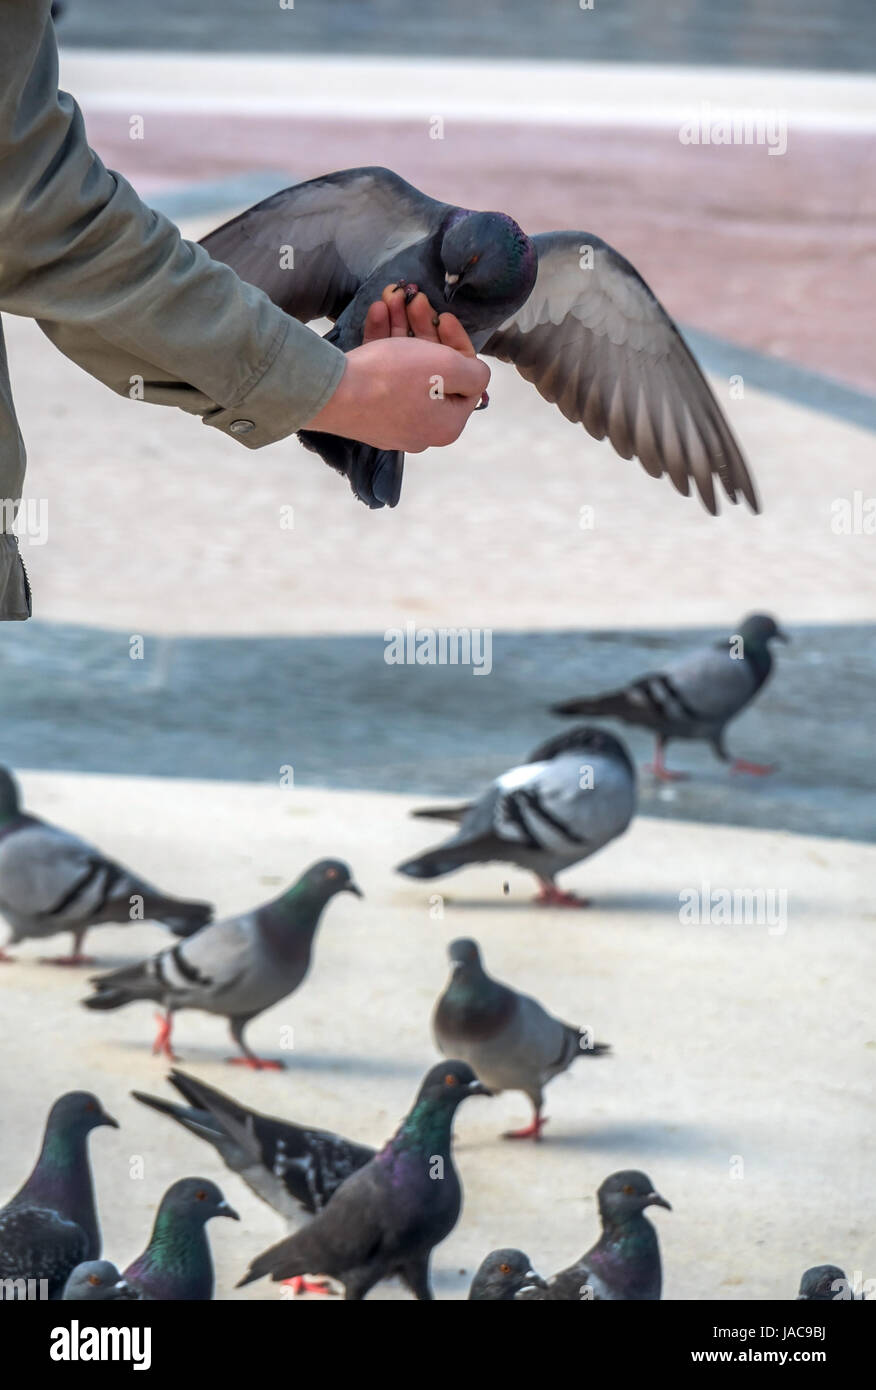 Un homme se nourrit les pigeons dans une ville, Ein Mann füttert in einer Stadt Tauben Banque D'Images